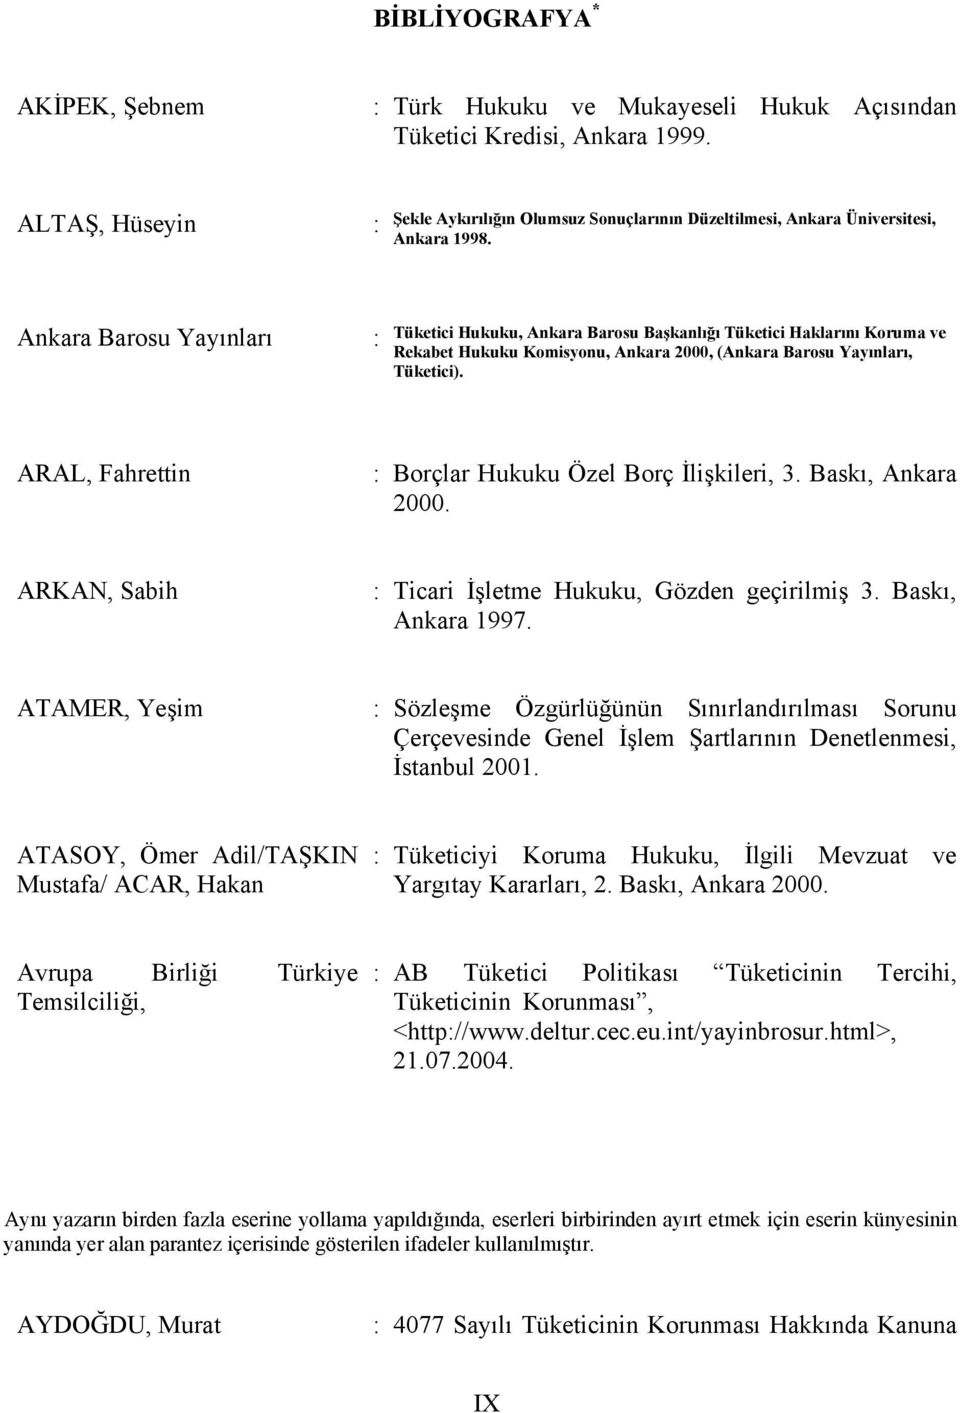 Ankara Barosu Yayınları : Tüketici Hukuku, Ankara Barosu Başkanlığı Tüketici Haklarını Koruma ve Rekabet Hukuku Komisyonu, Ankara 2000, (Ankara Barosu Yayınları, Tüketici).